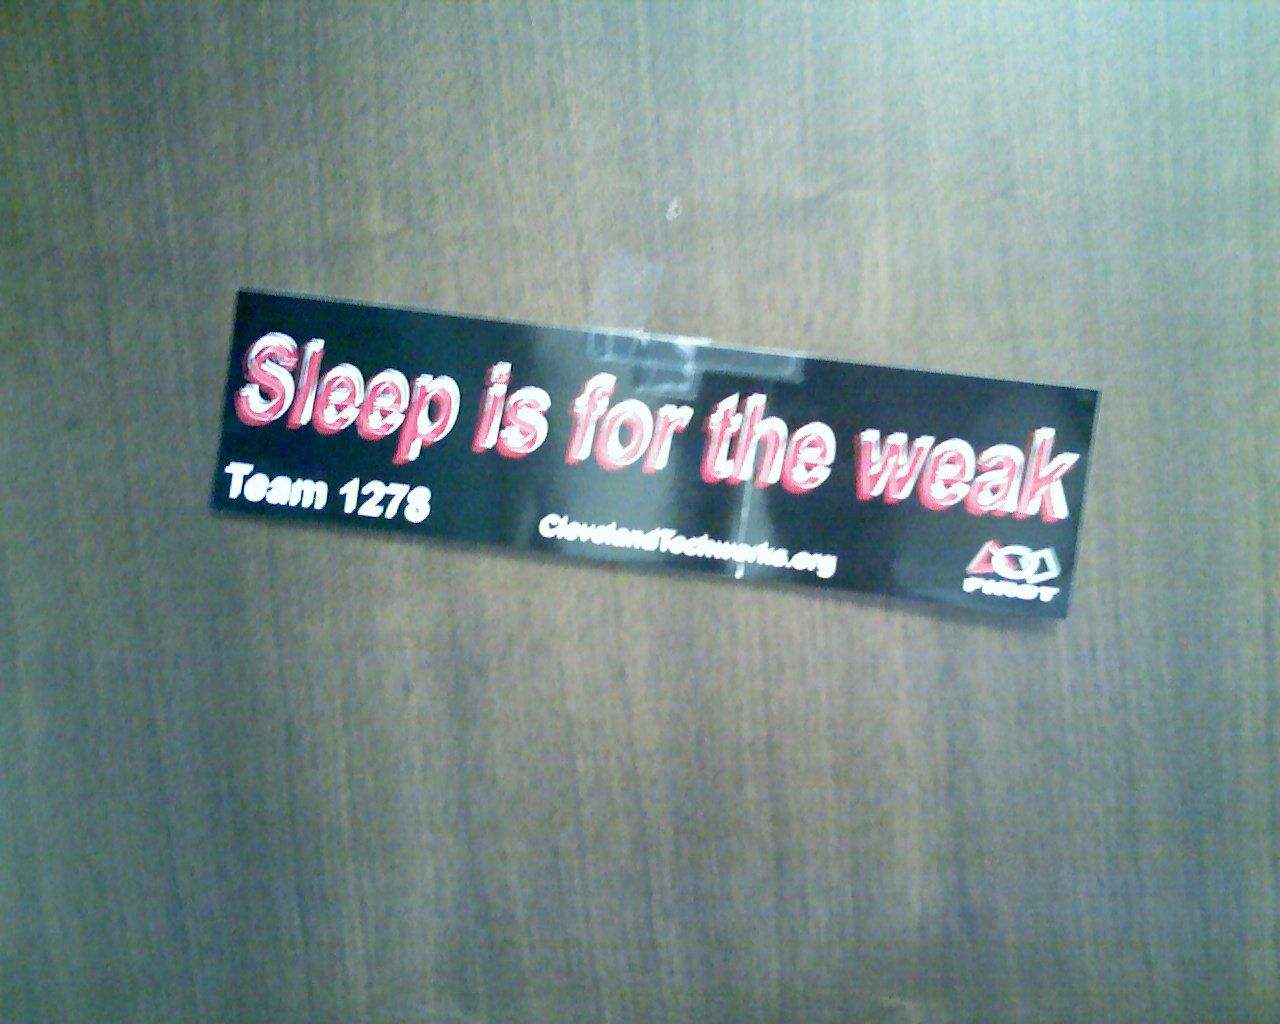 Sleep is for the weak